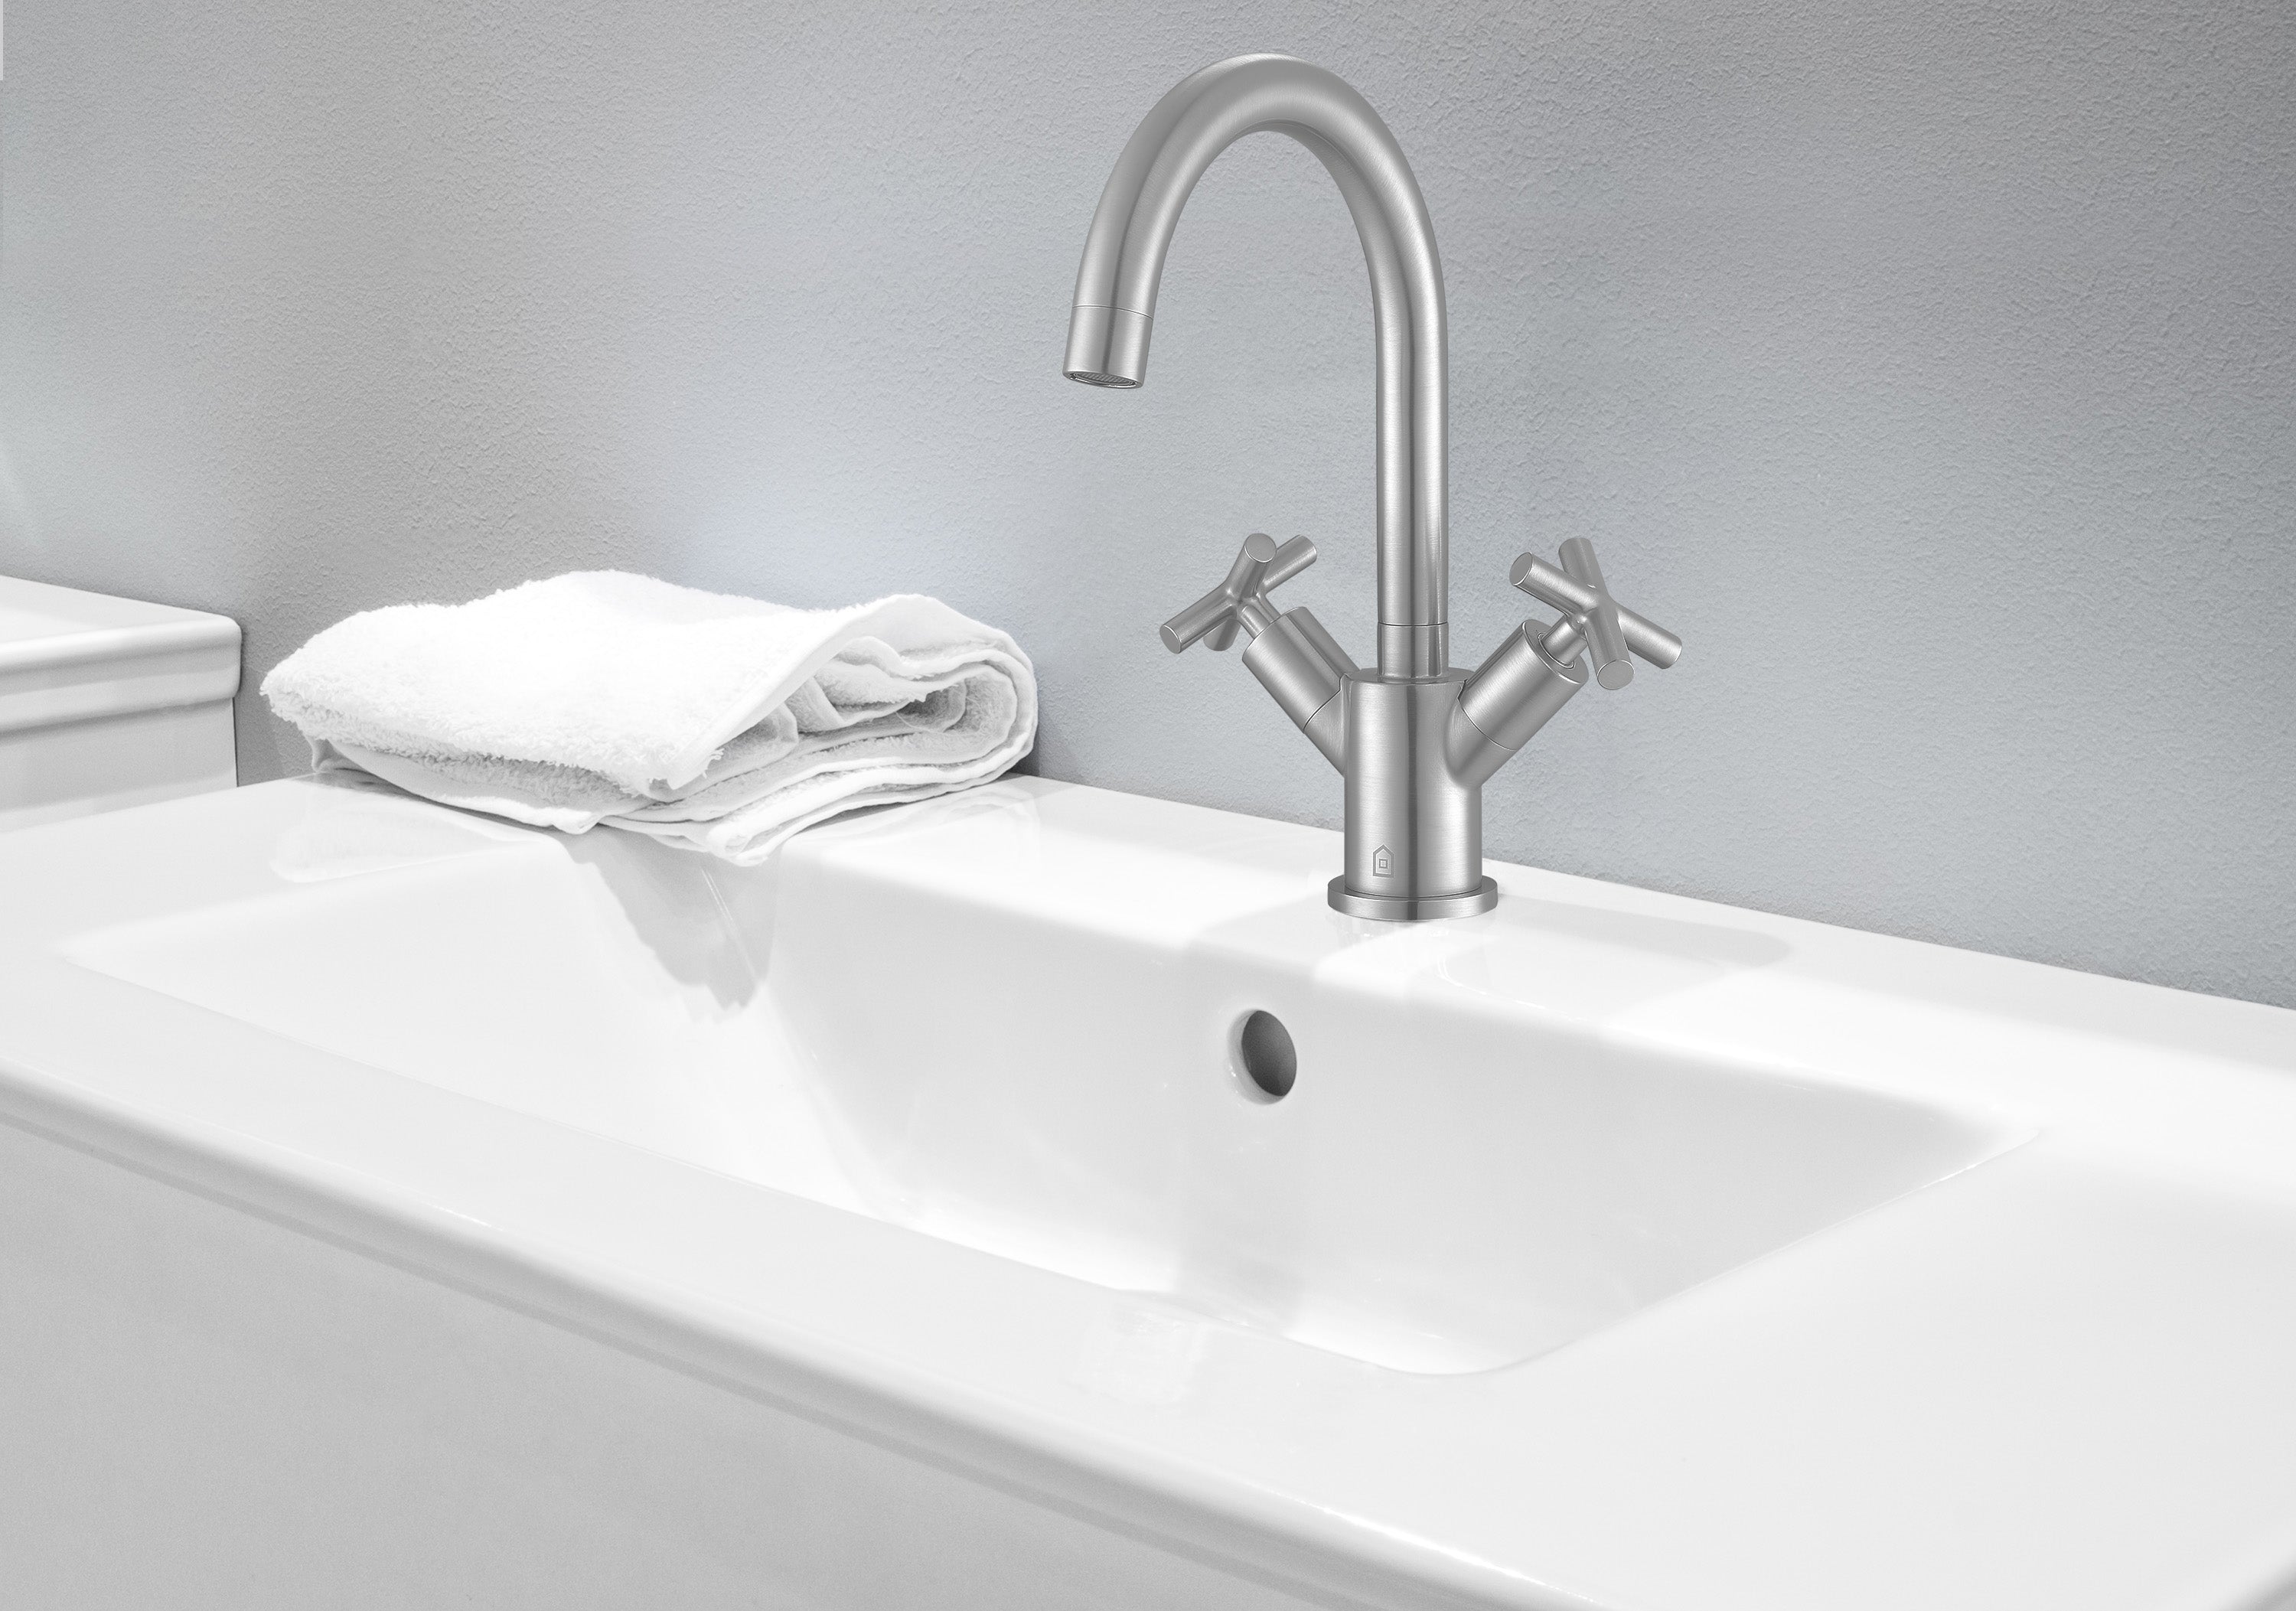 Ava Series Single Hole Cross Handle Bathroom Faucet in Brushed Nickel